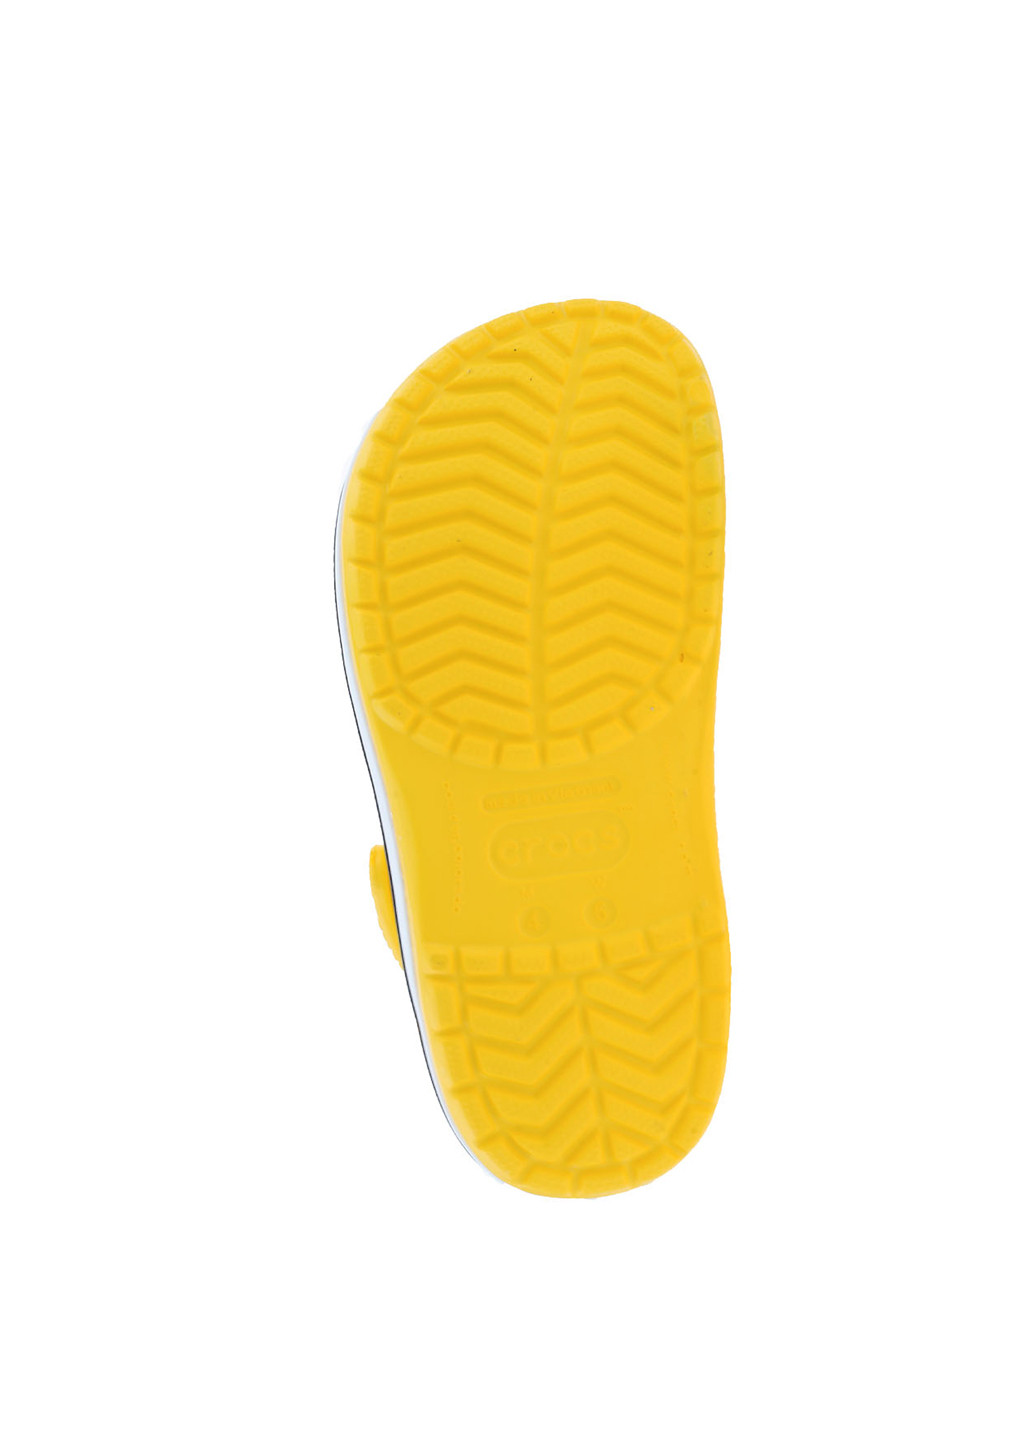 Желтые сабо Crocs без каблука